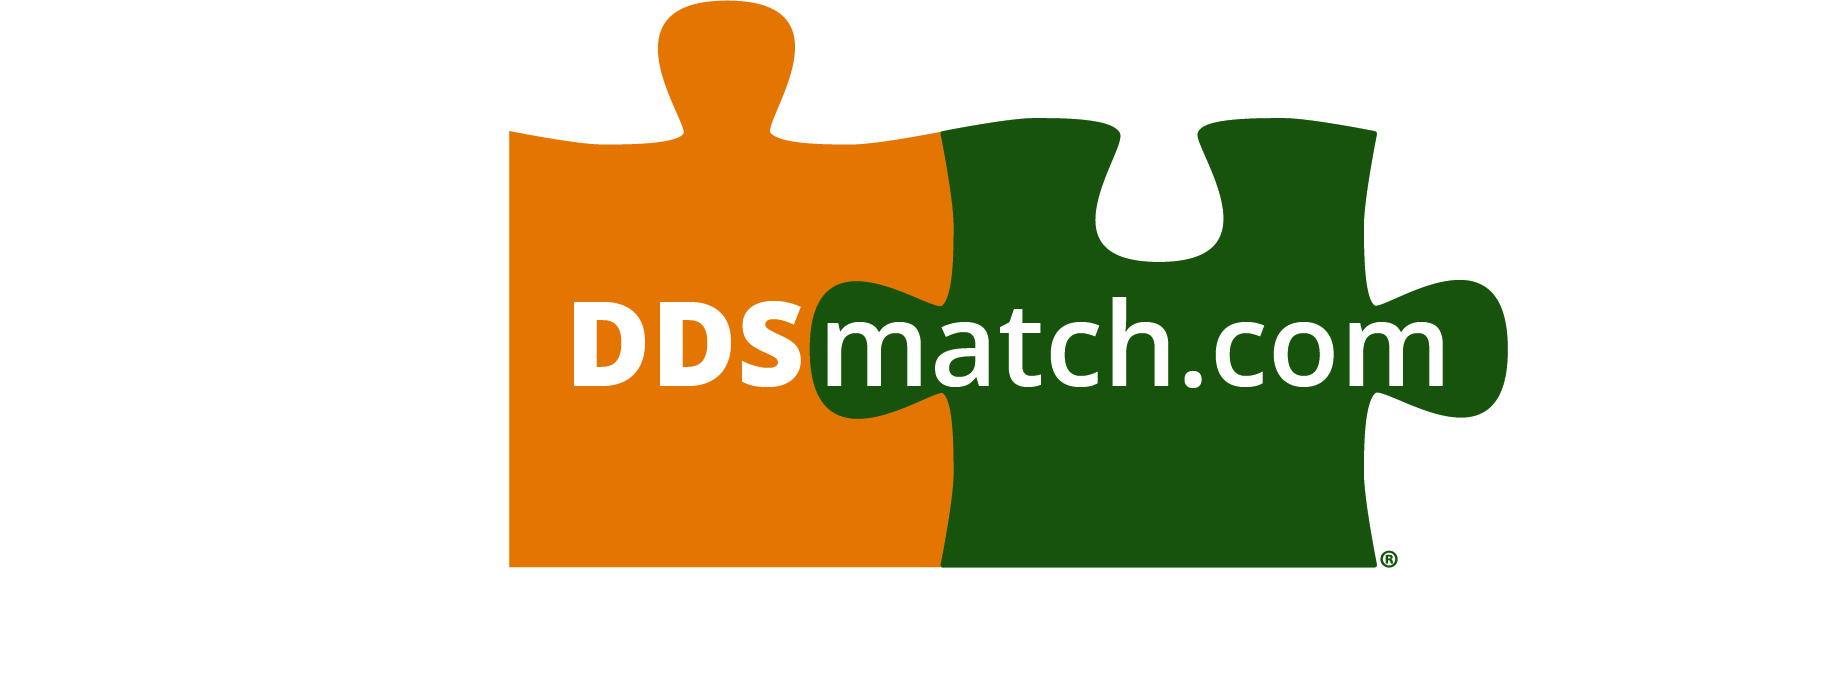 ddsmatch.com - Andy Edmister/Randy Kinnison Logo